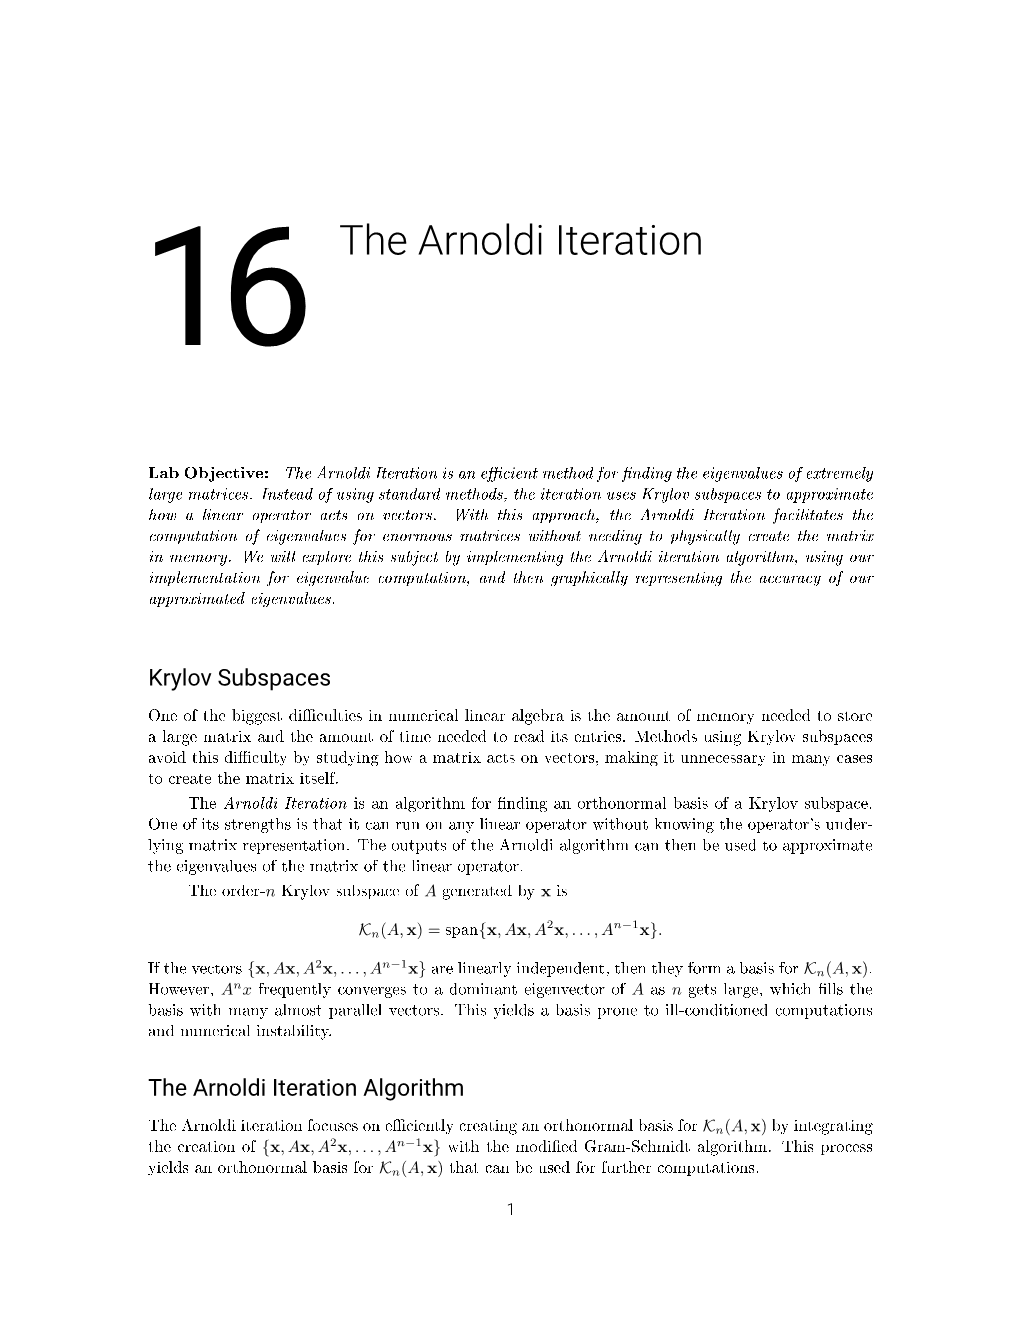 6The Arnoldi Iteration